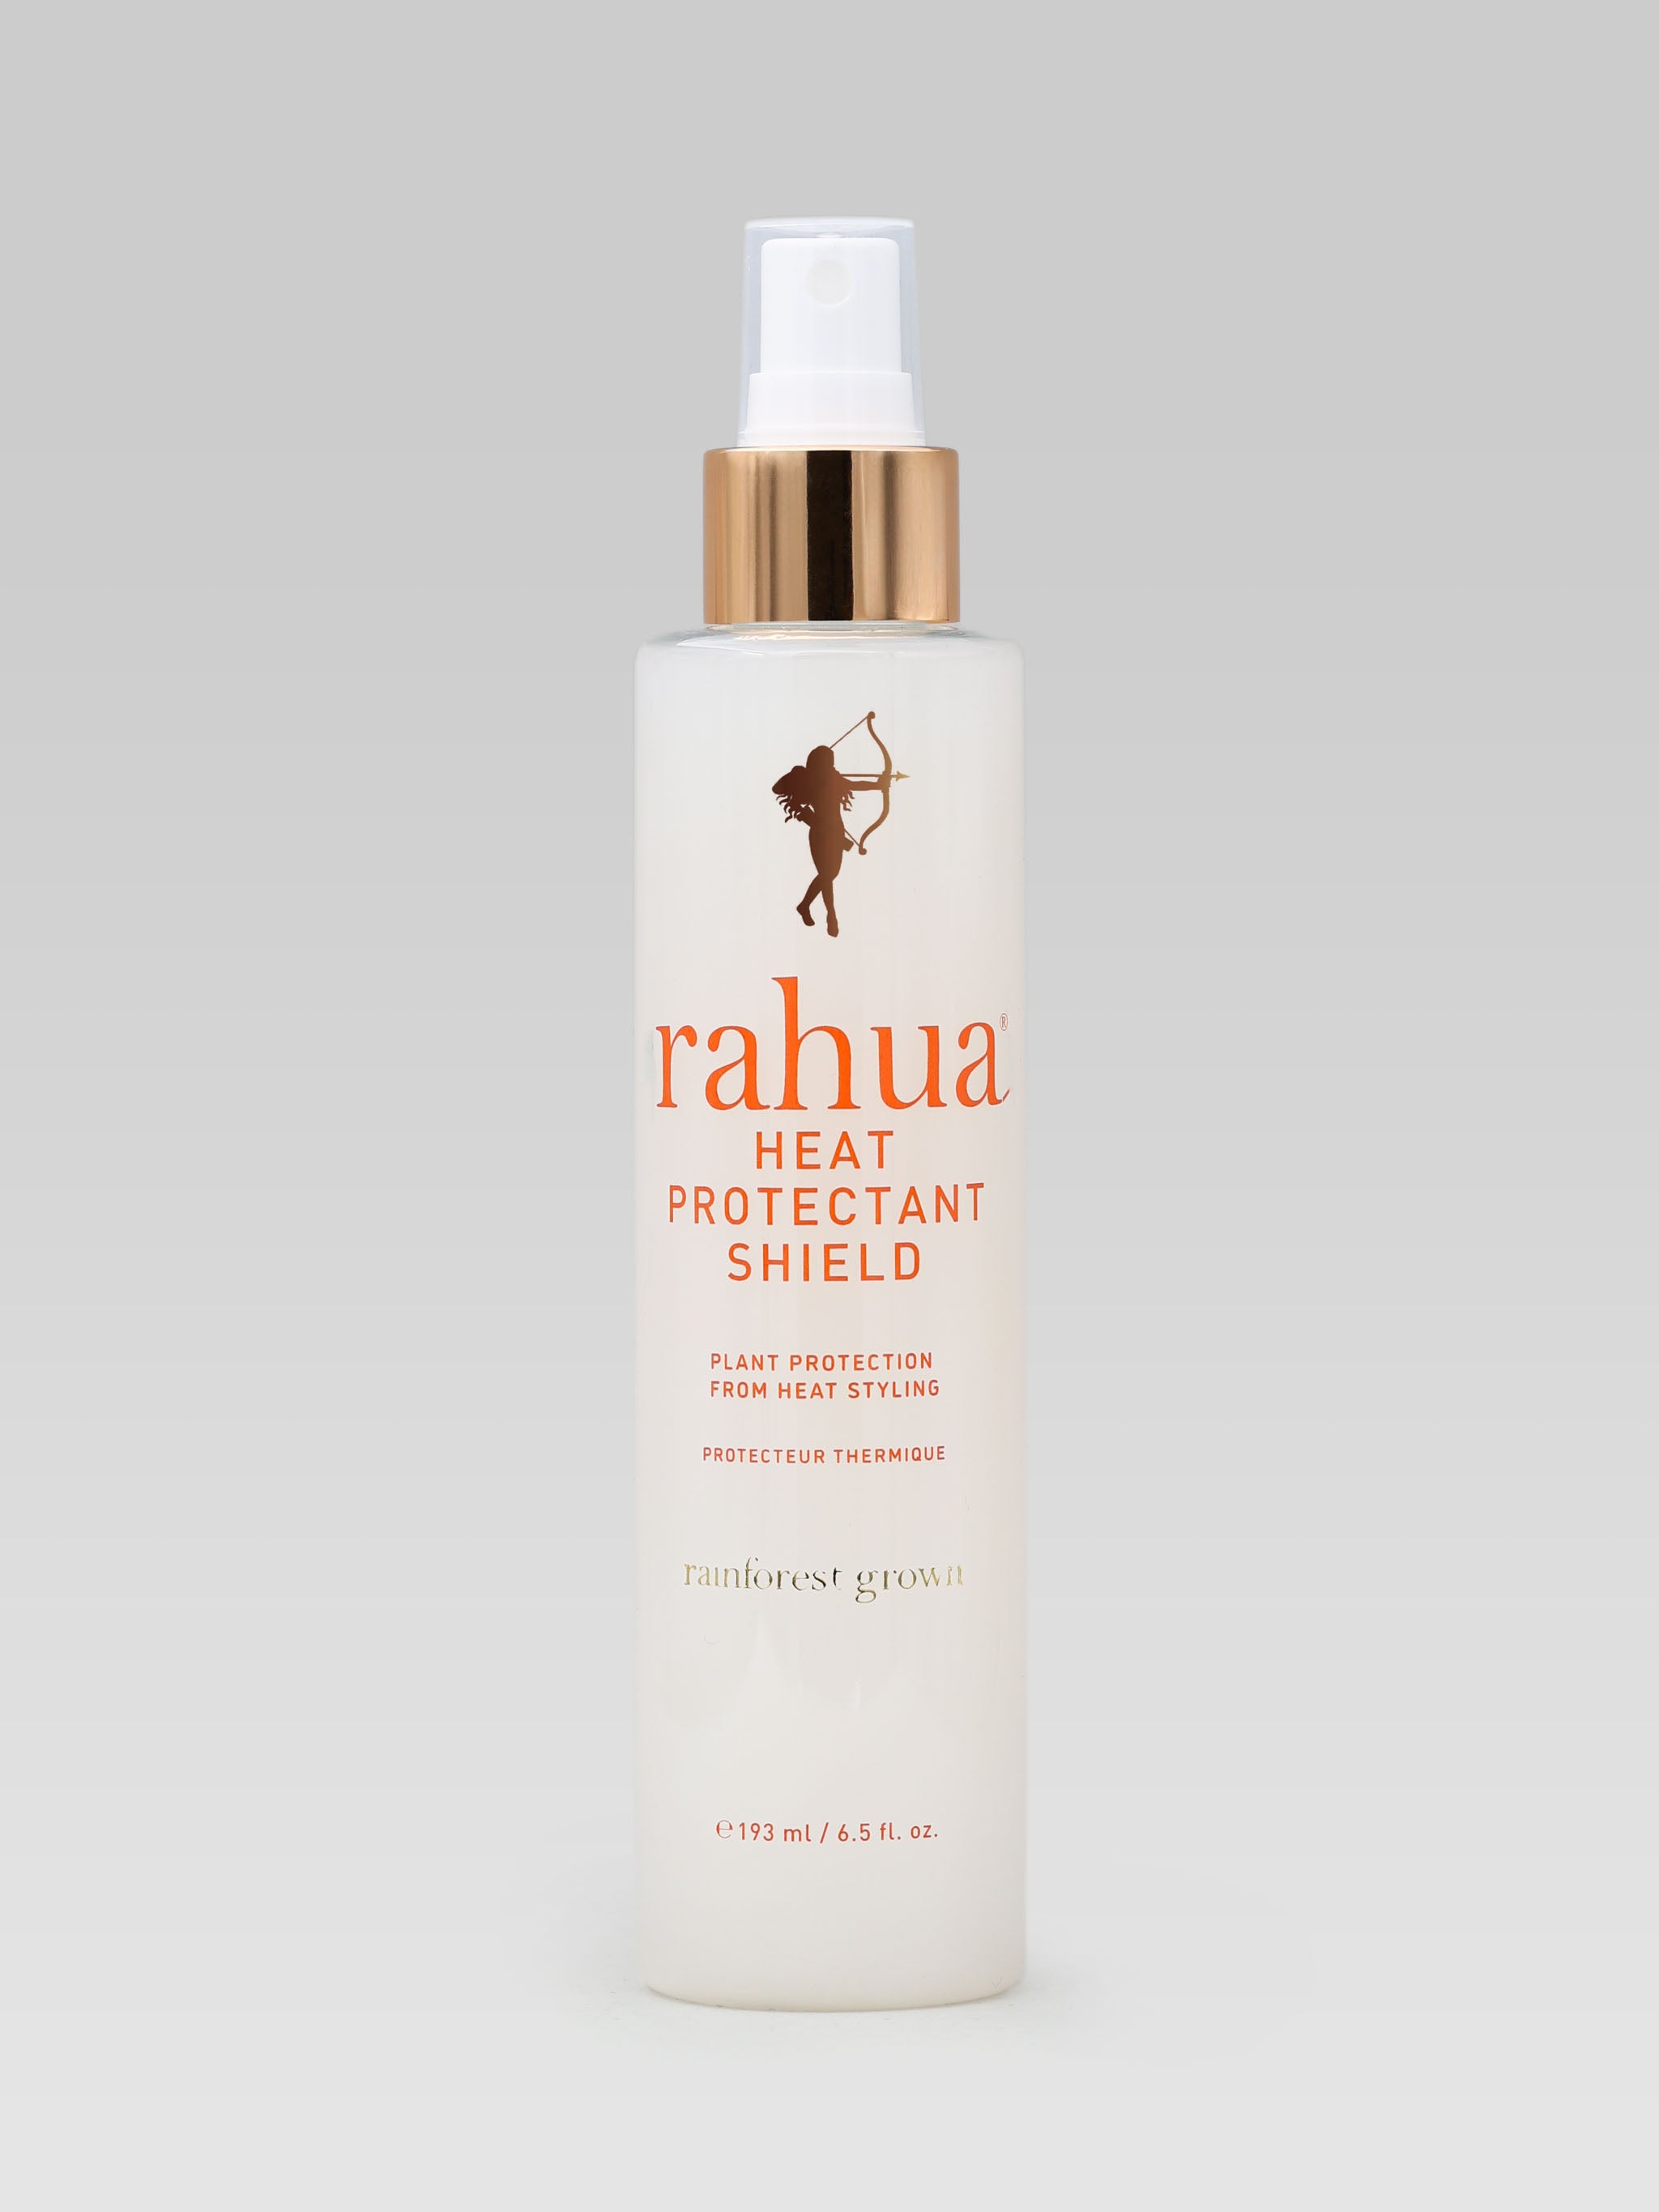 Rahua Heat Protection Shield product shot